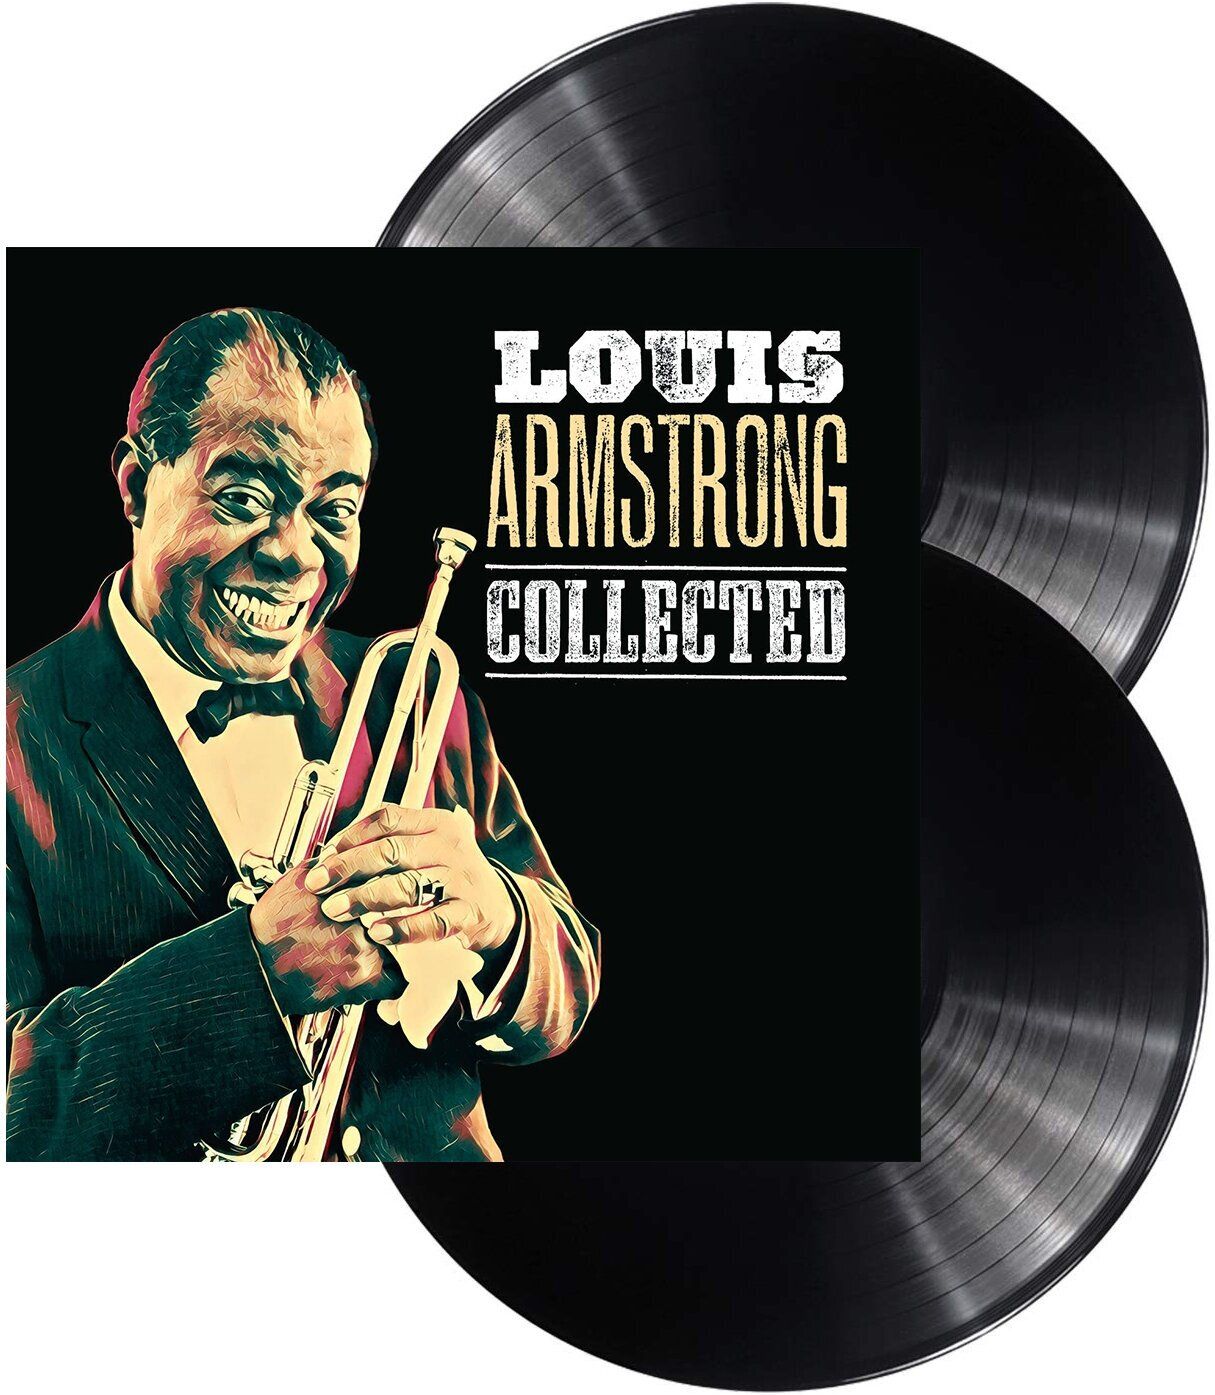 Виниловая пластинка Armstrong, Louis, Collected (0600753814345) виниловая пластинка louis